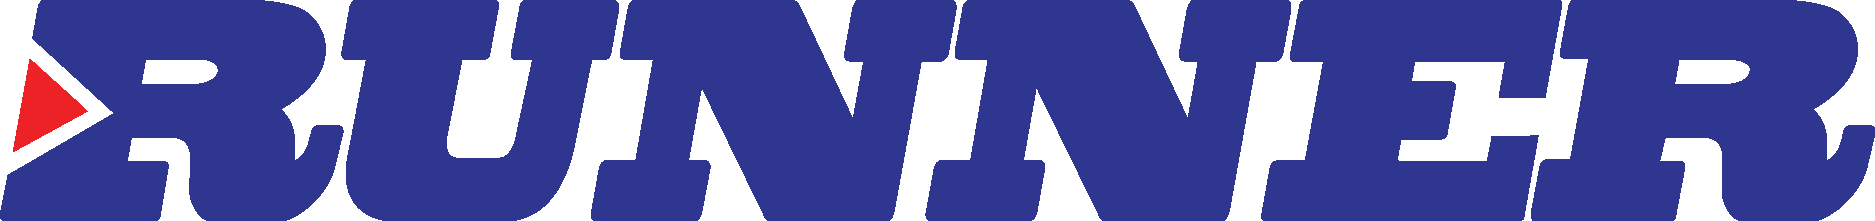 Runner Athlete Icon Logo Design Graphic by dimensi design · Creative Fabrica